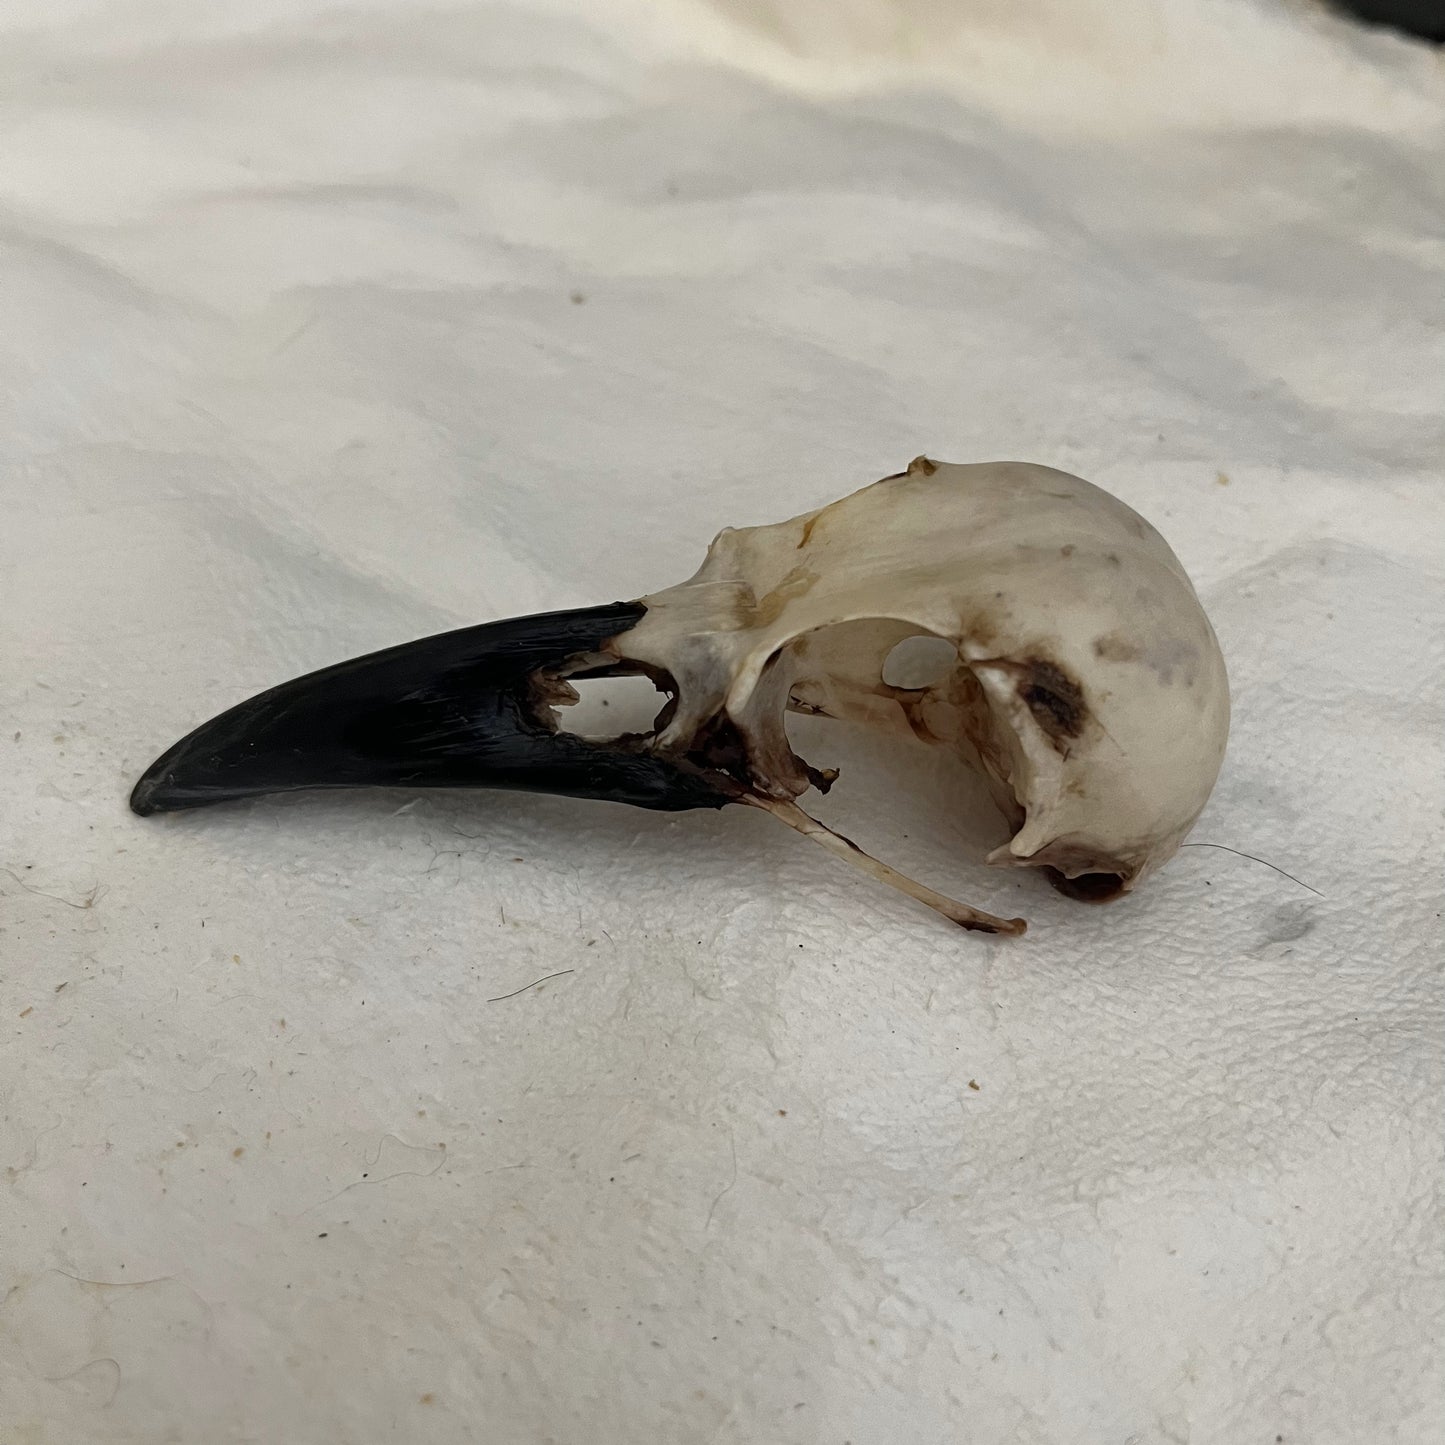 Crow Skull - Unwhitened and damaged